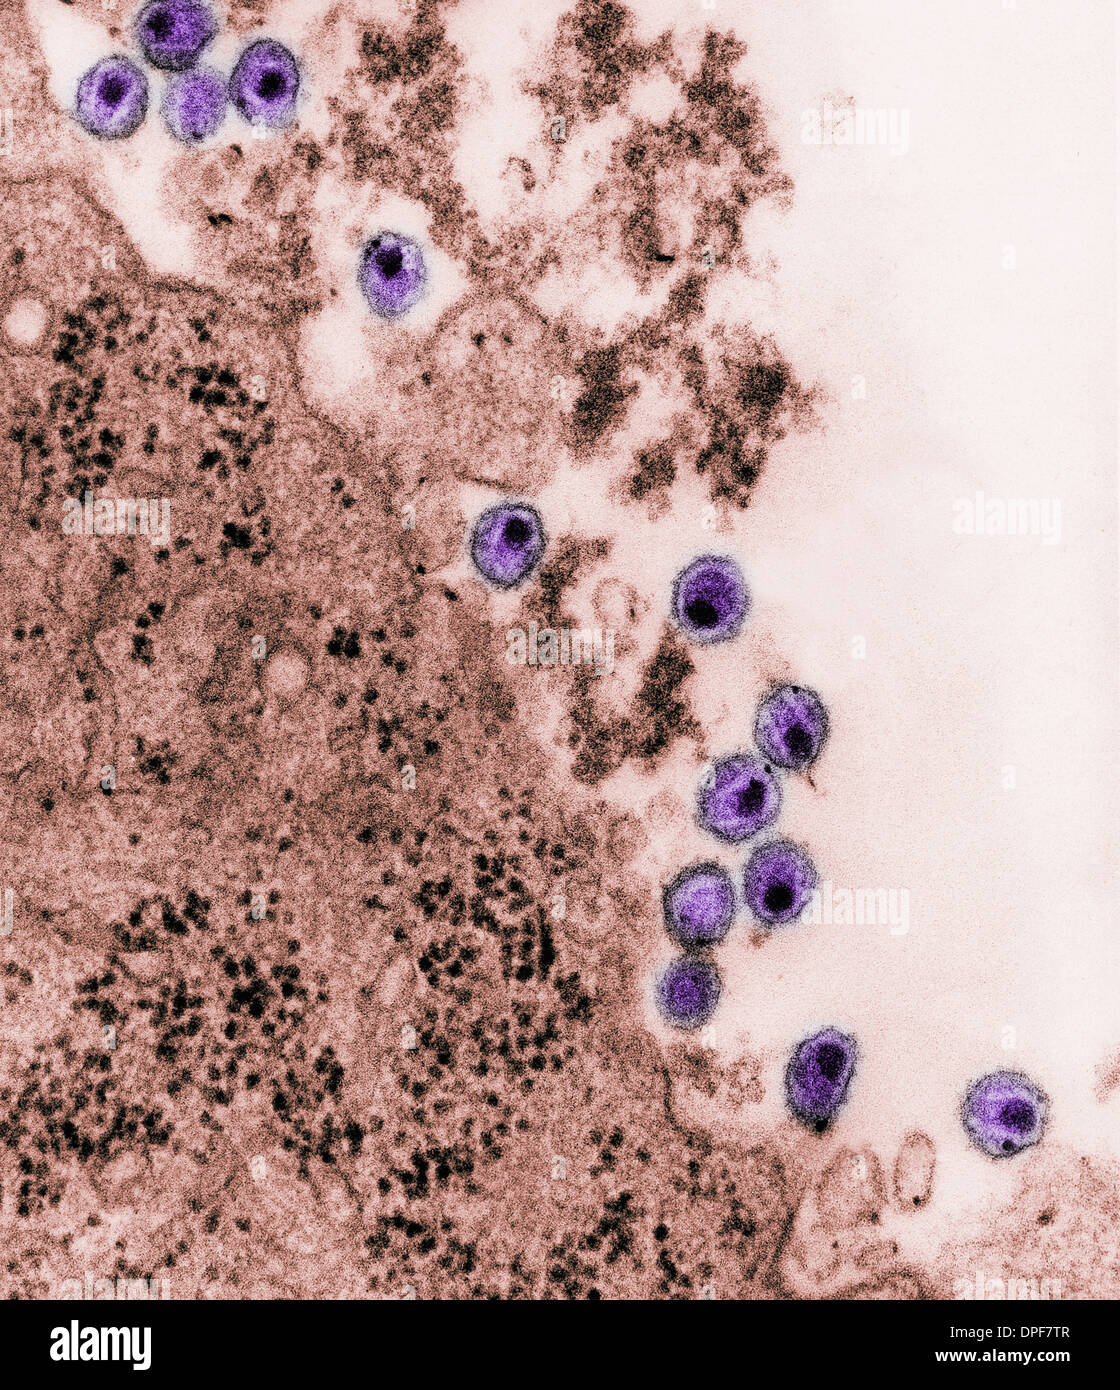 TEM of human immunodeficiency virus (HIV) virions Stock Photo